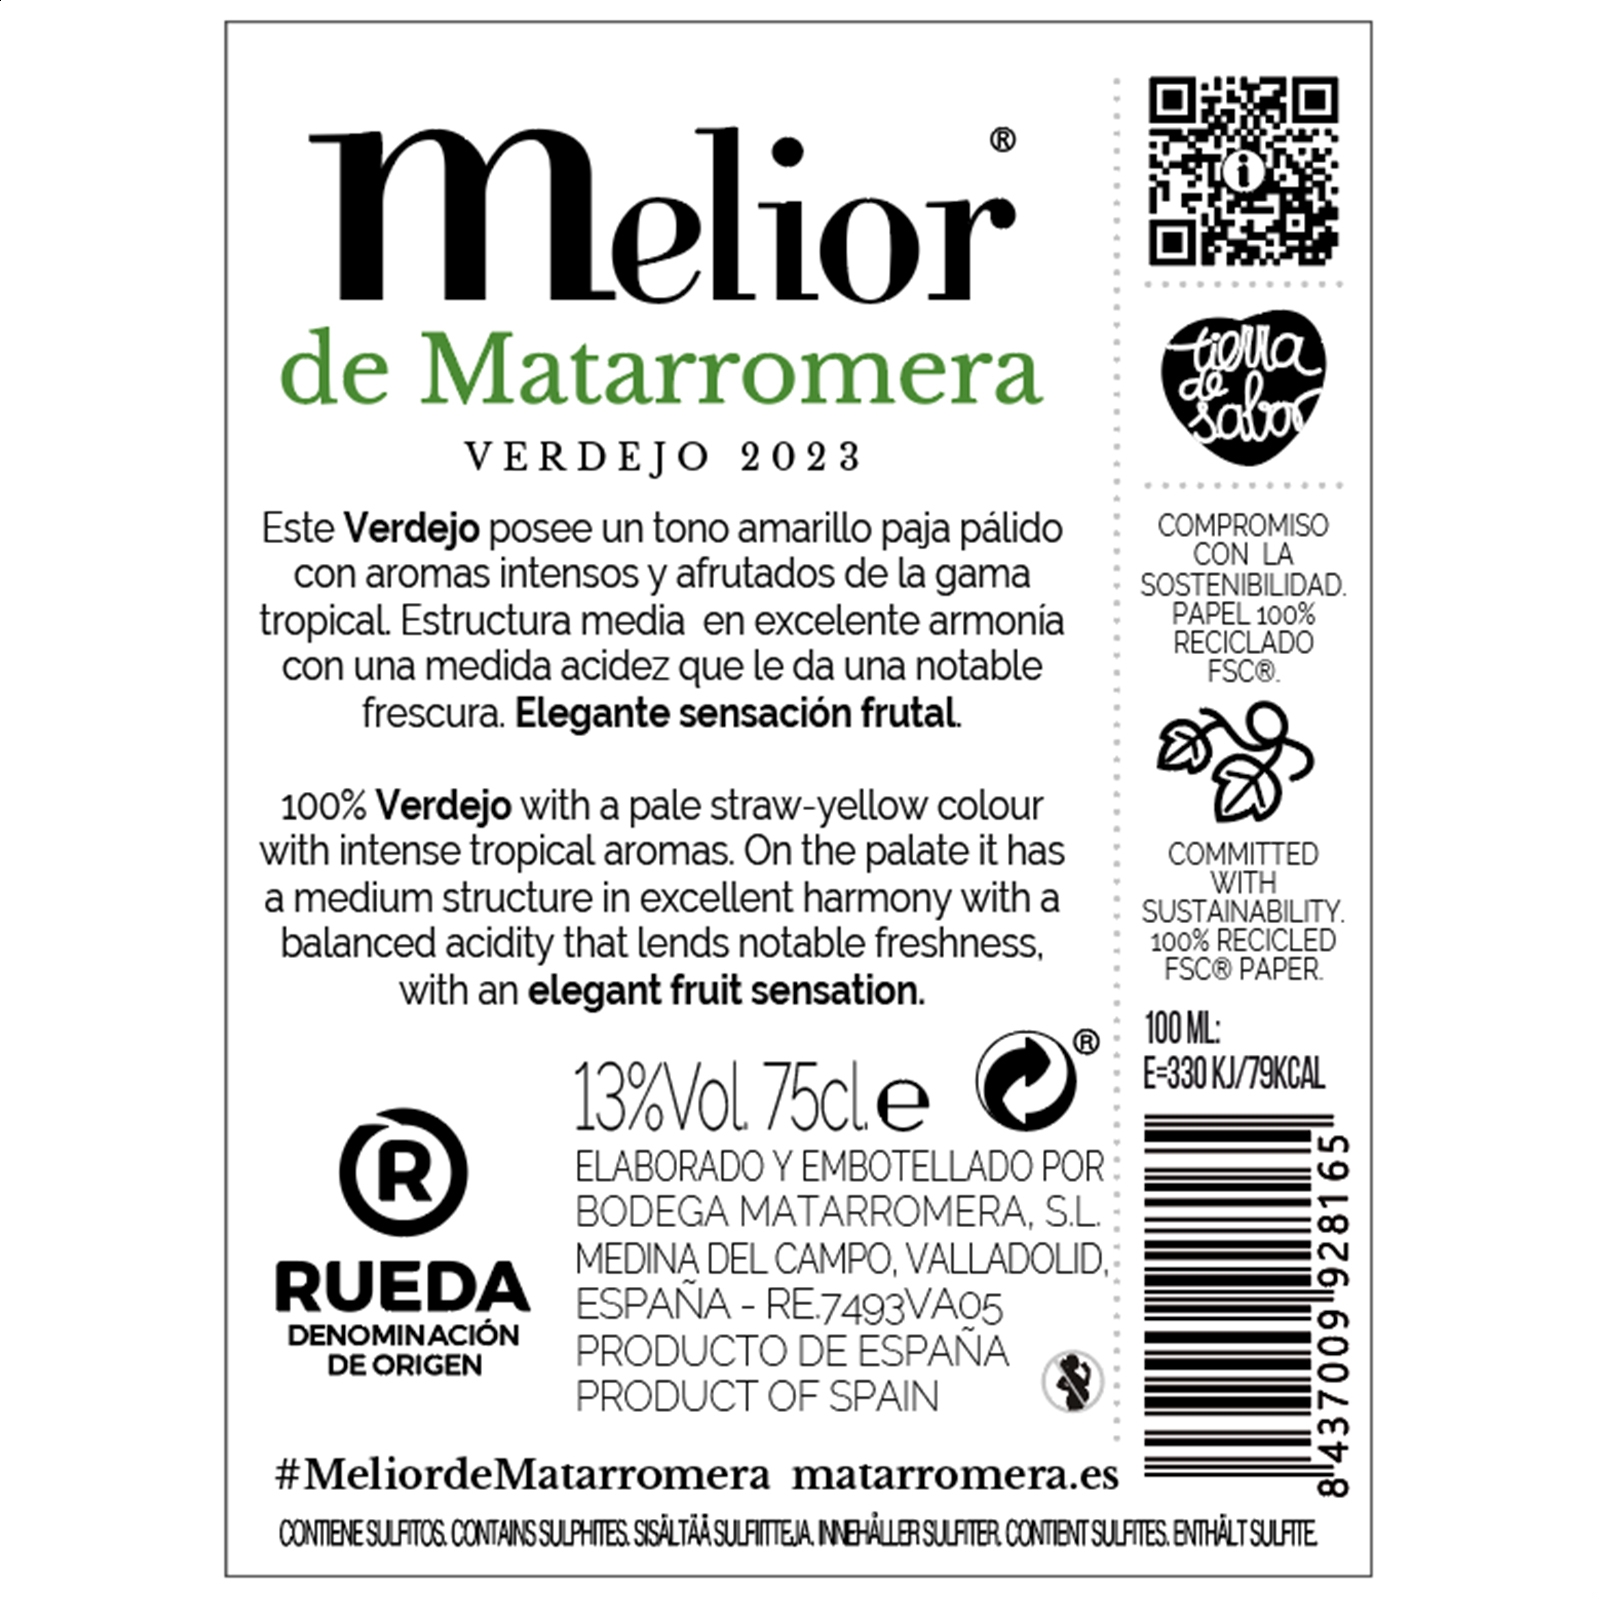 Bodega Matarromera - Melior vino blanco Verdejo D.O. Rueda 75cl, 6uds